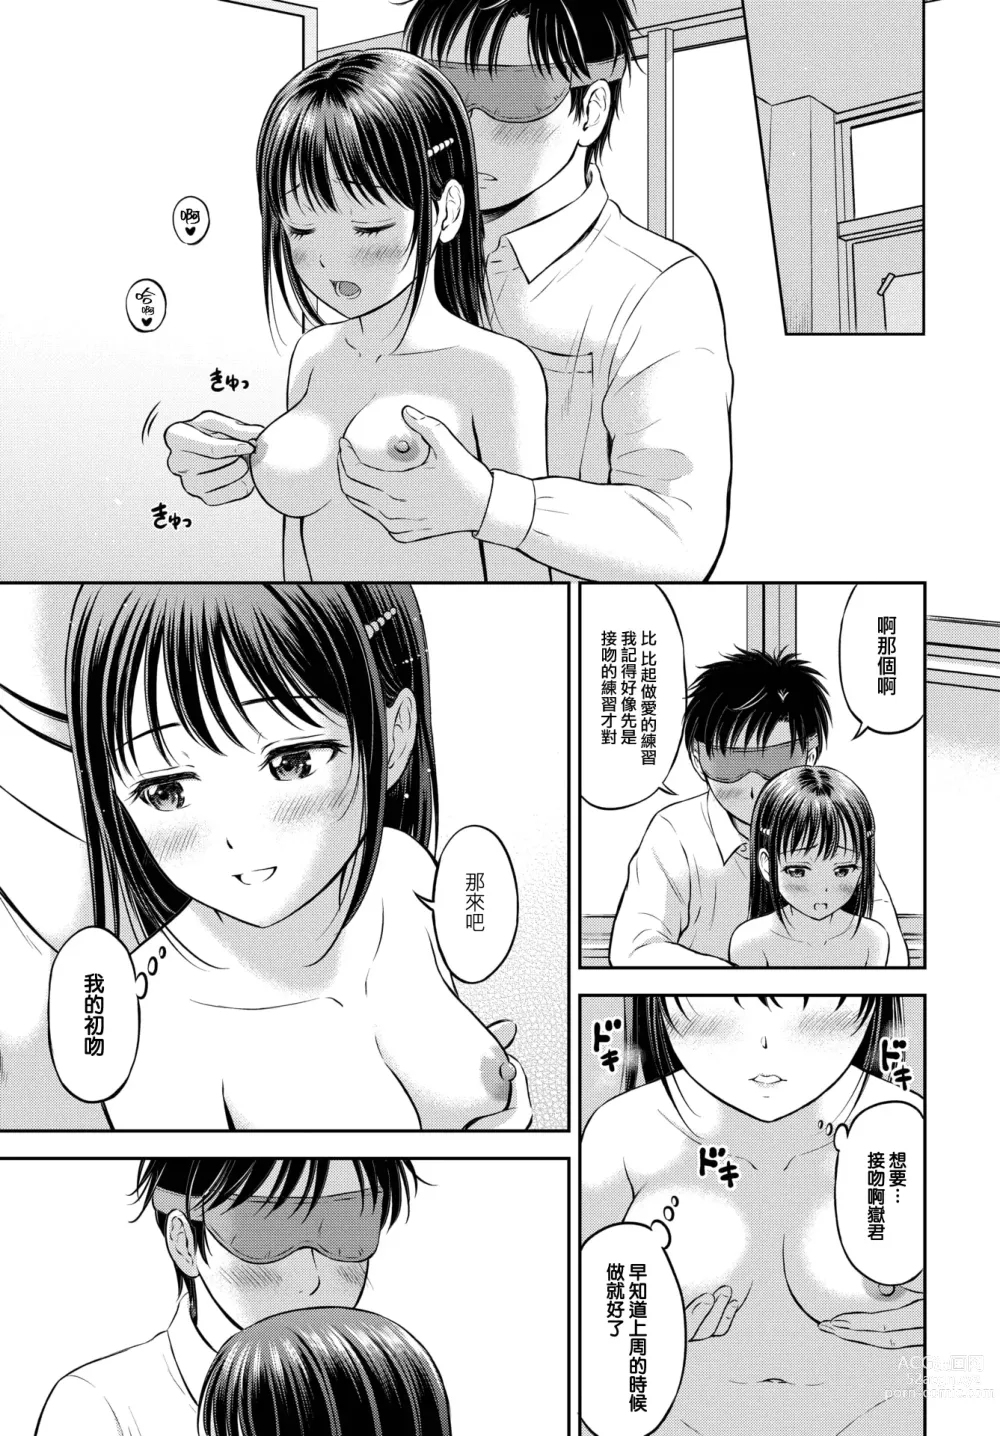 Page 6 of manga Kawari ni Narimasu - Im going to take her place. -Kouhen-